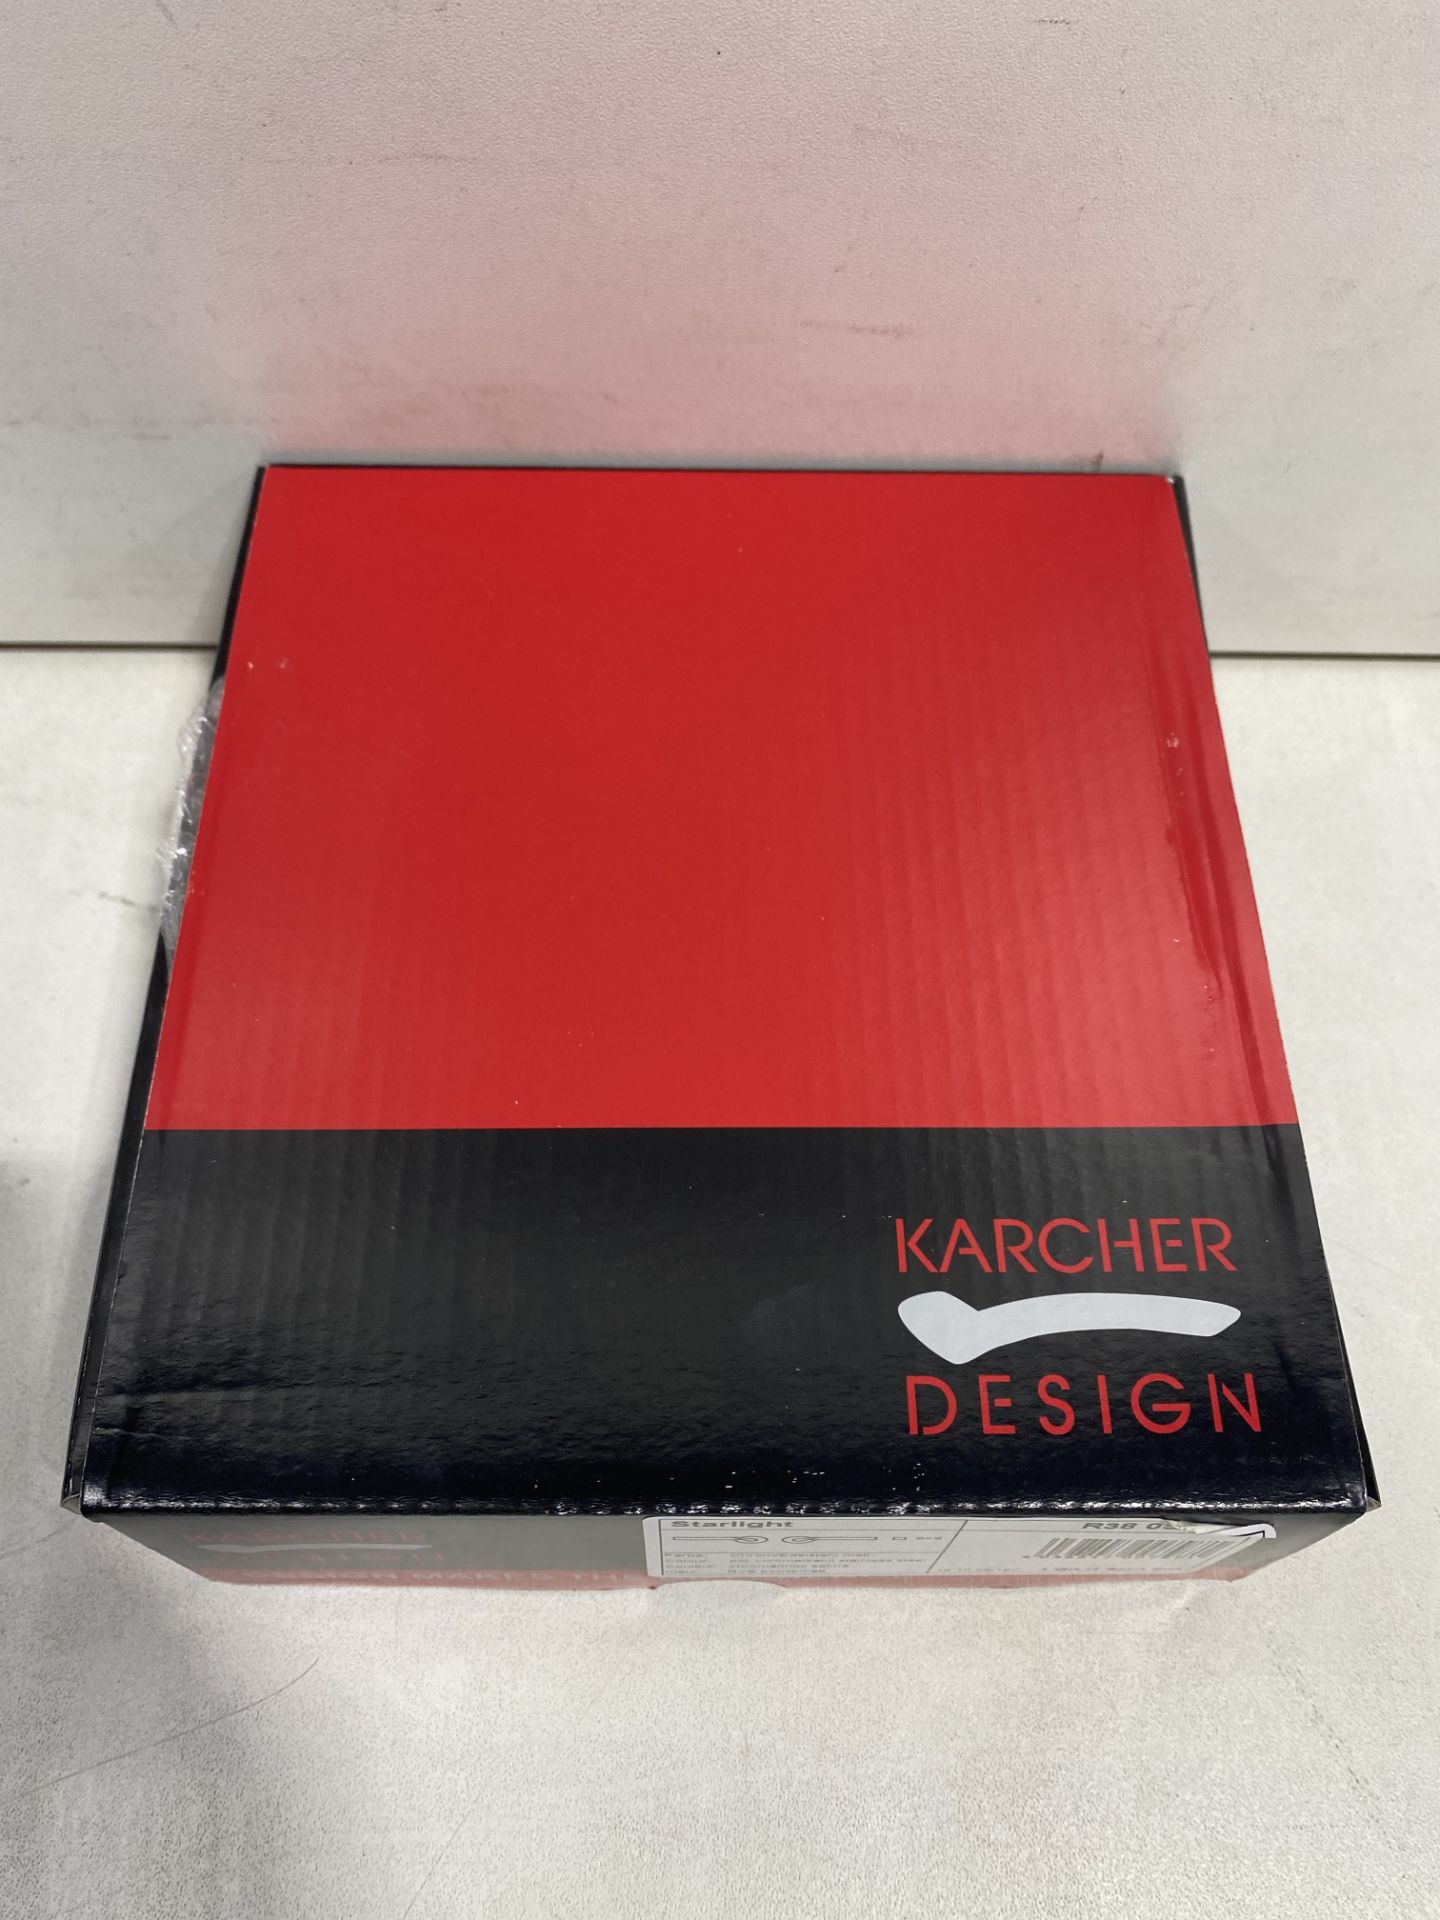 3 x Karcher Design R38 Starlight Lever Handle Set | Total RRP £122.85 - Image 2 of 4